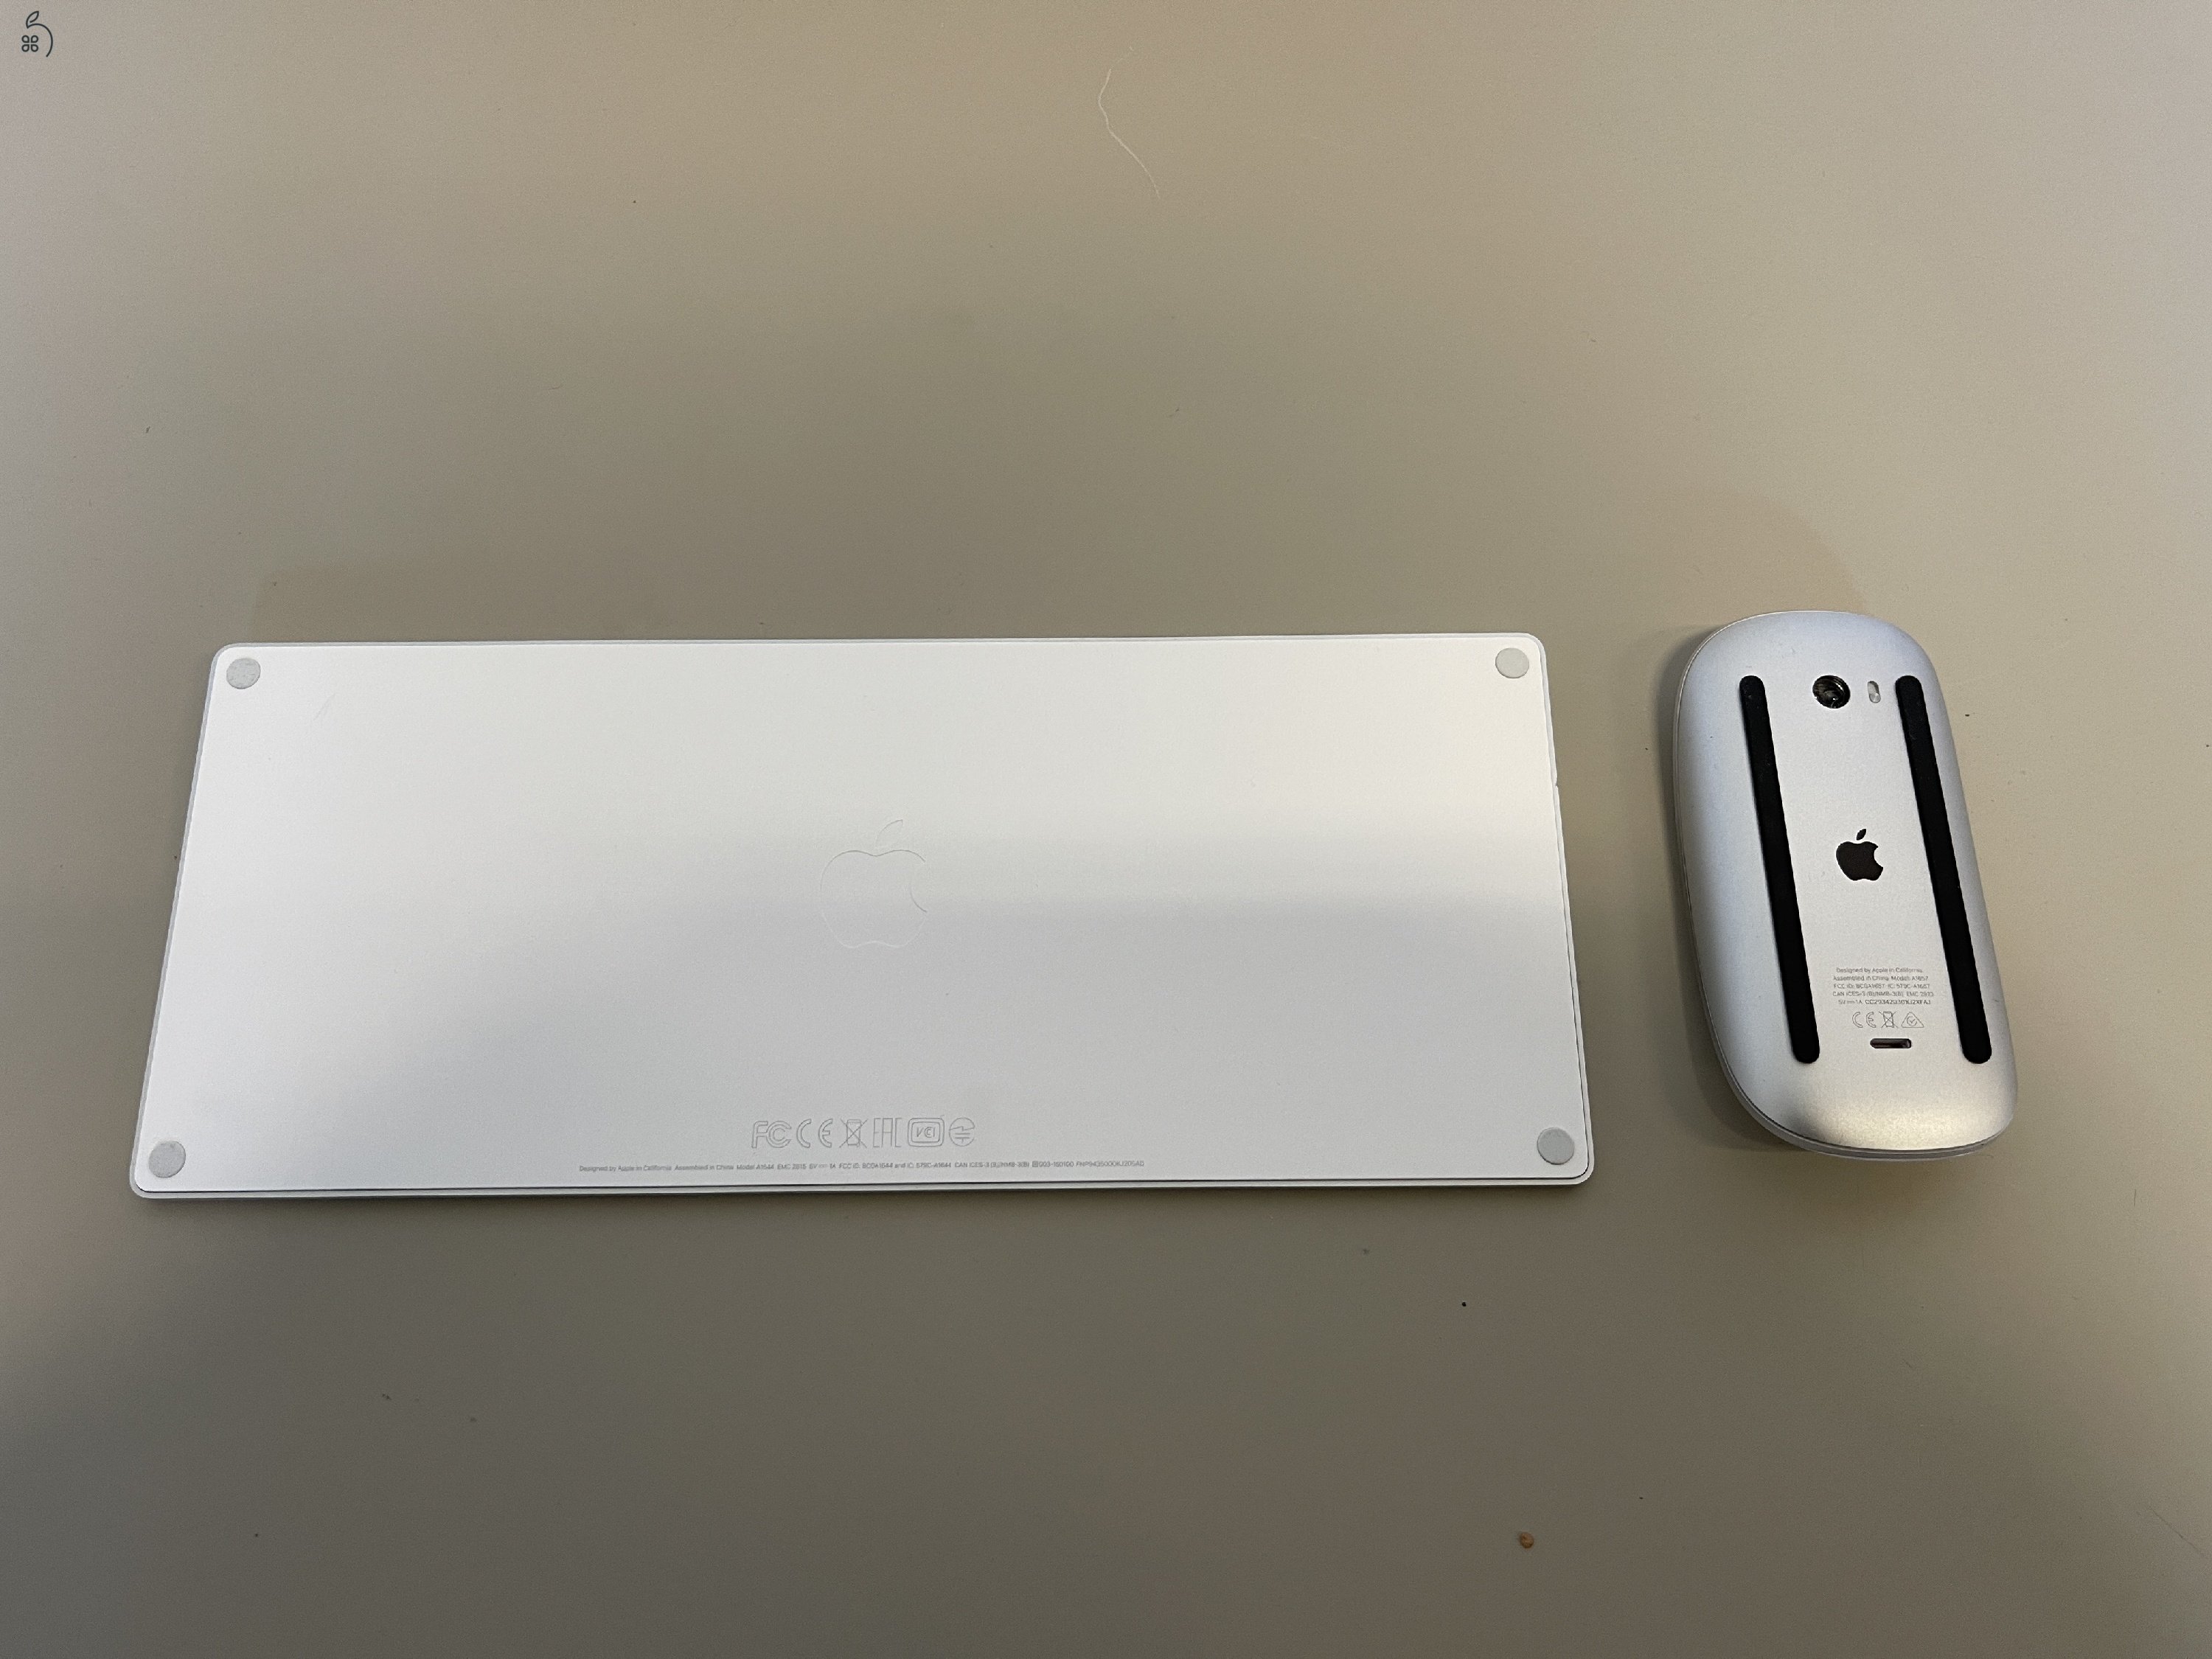 Apple Magic Keyboard 2 + Apple Magic Mouse 2 eladó!